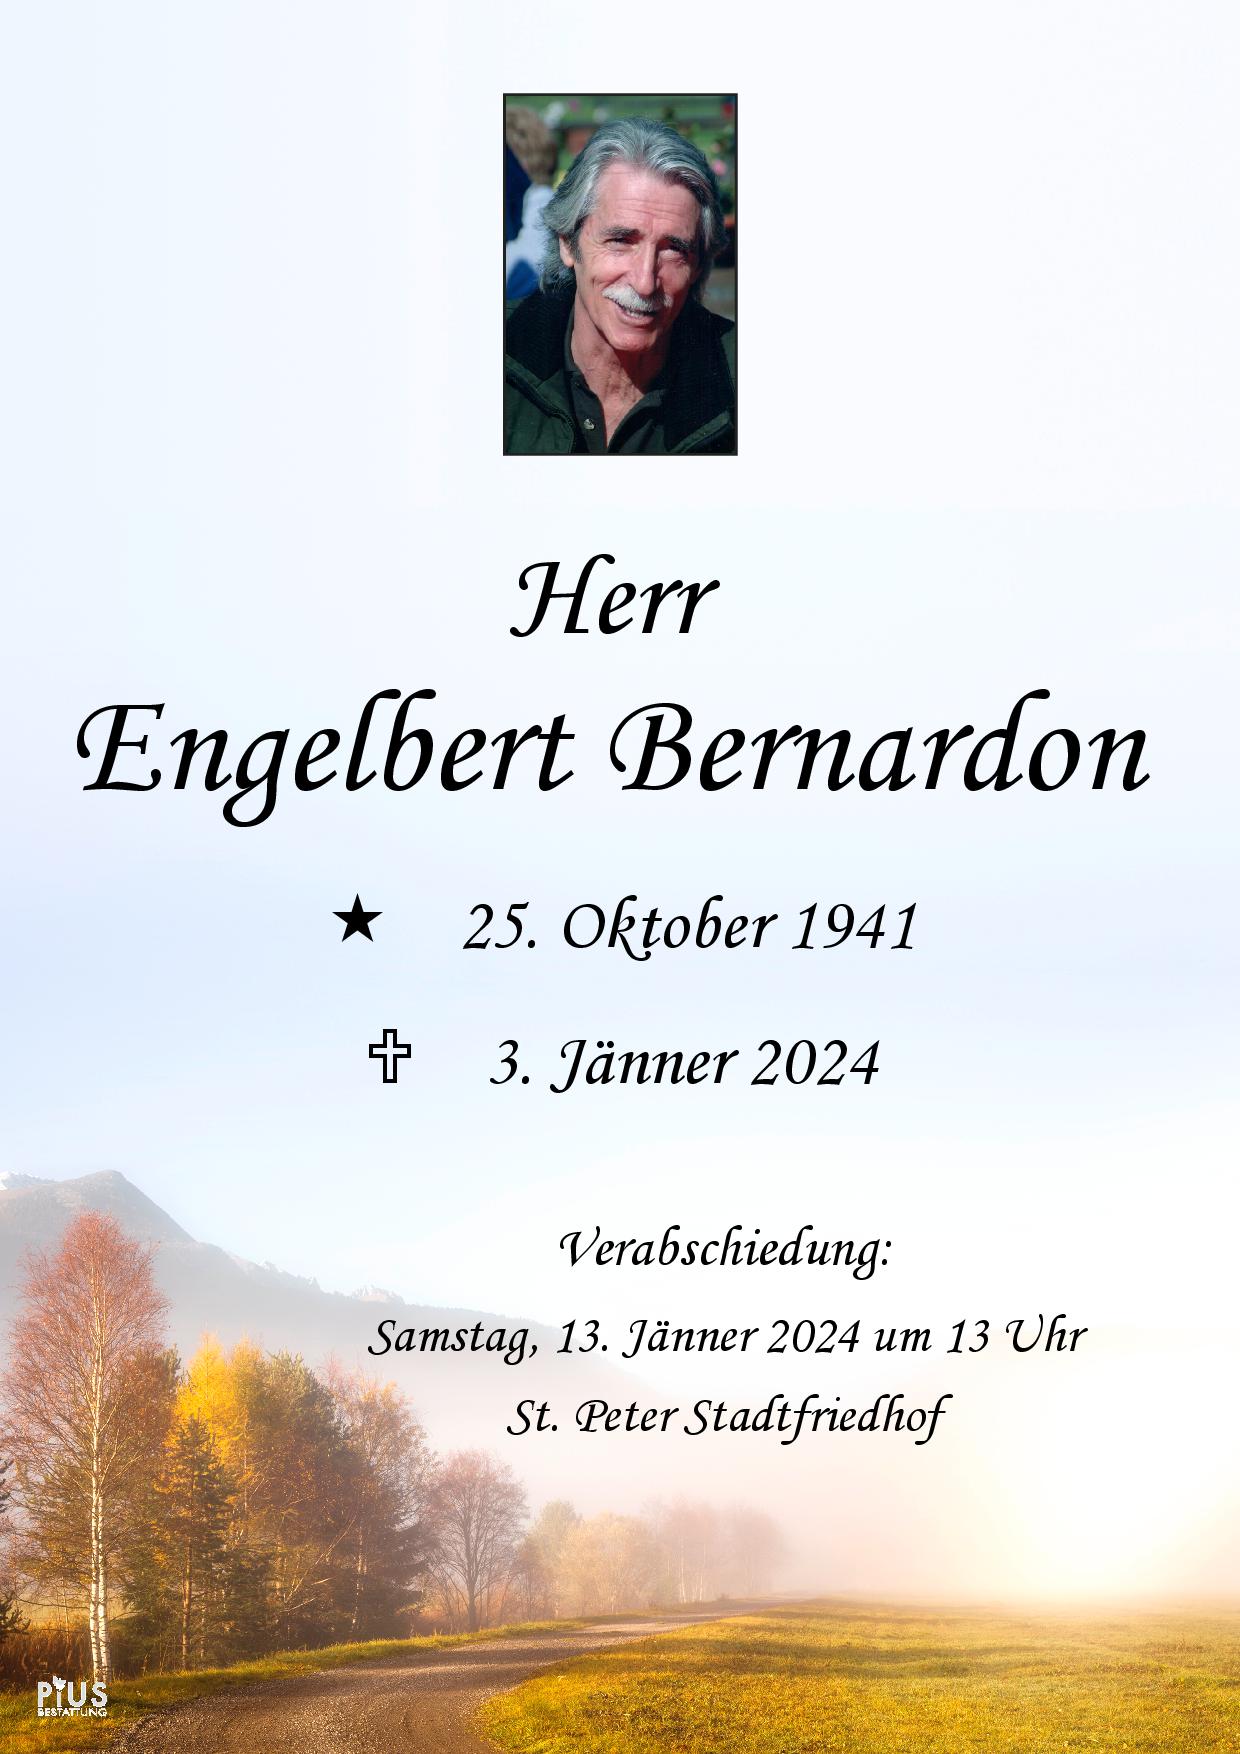 Engelbert Bernardon